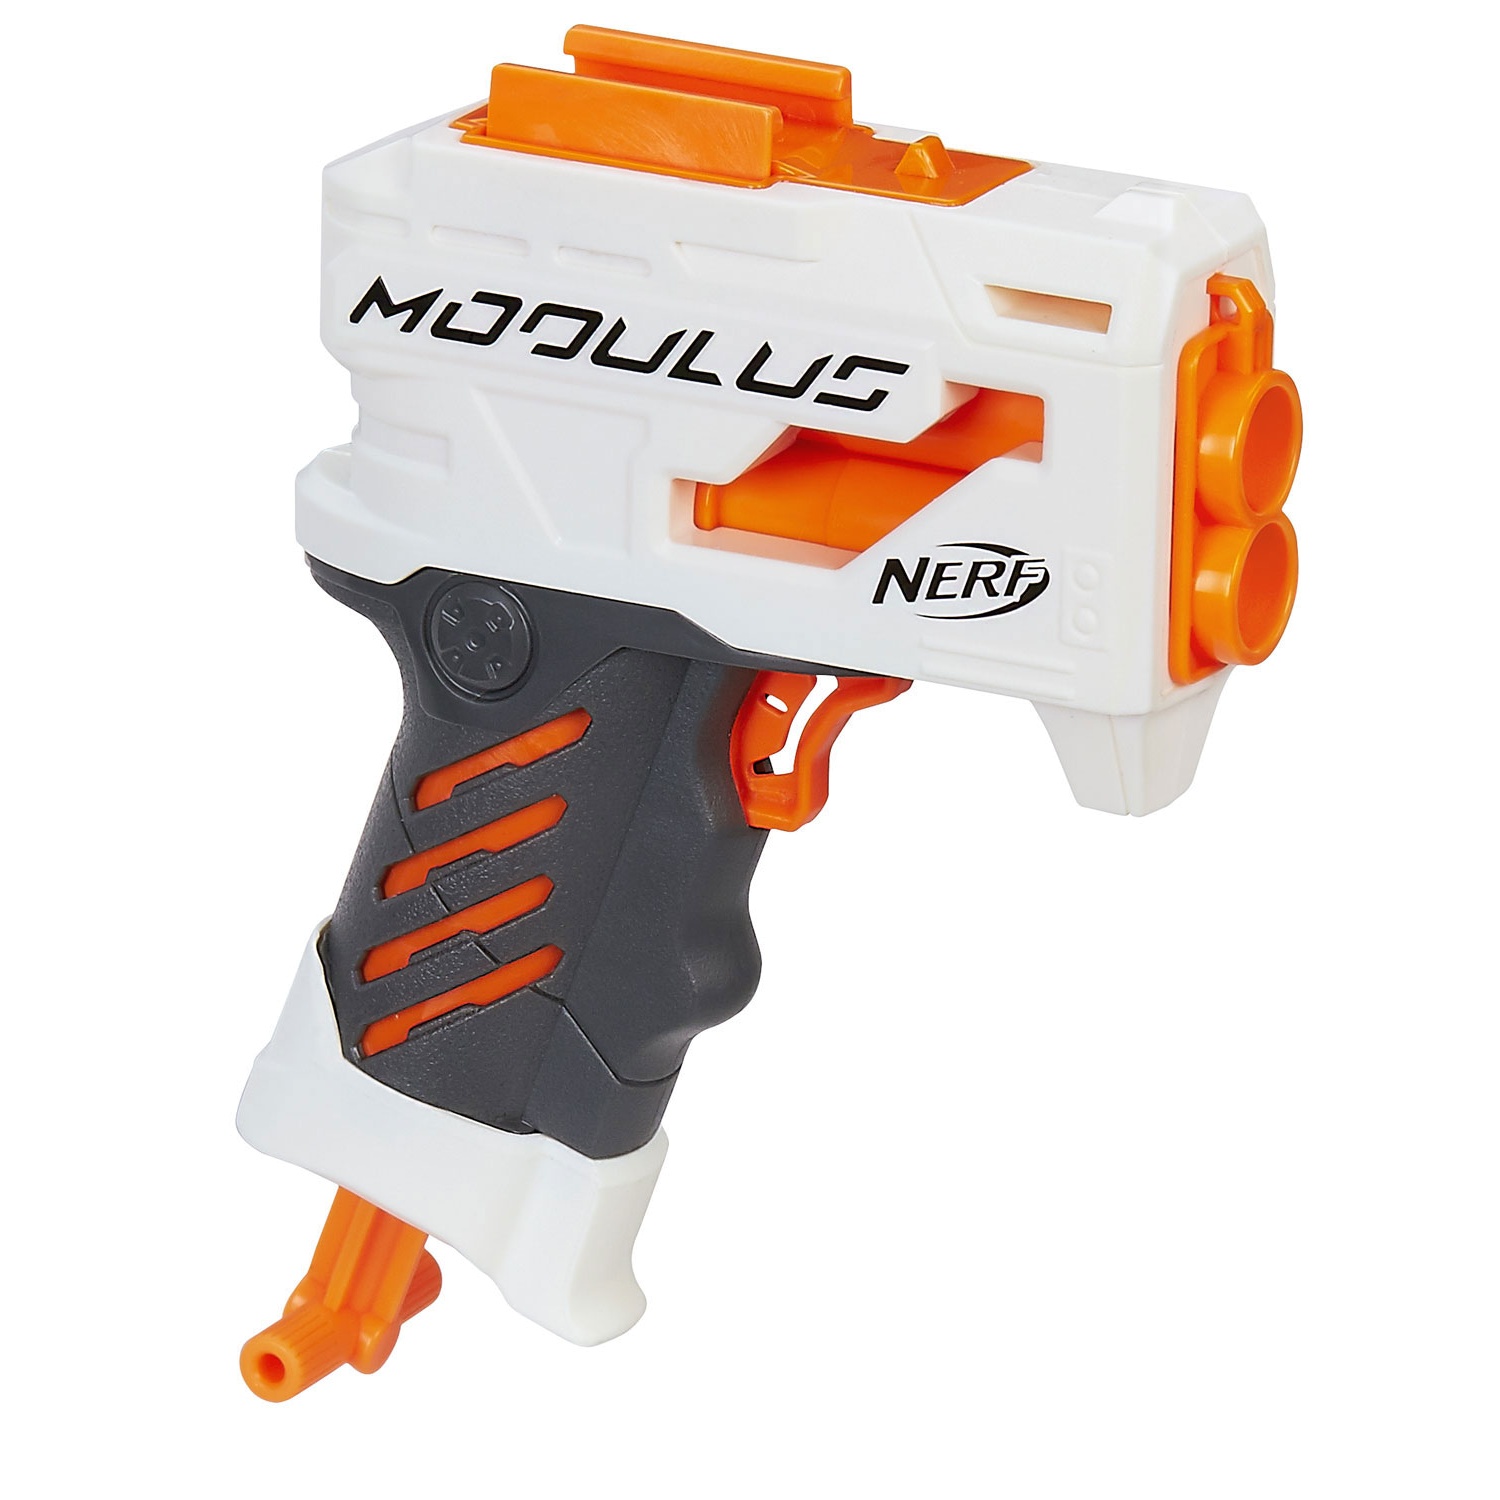 NERF Modulus StockShot Blaster – All Round Store (For